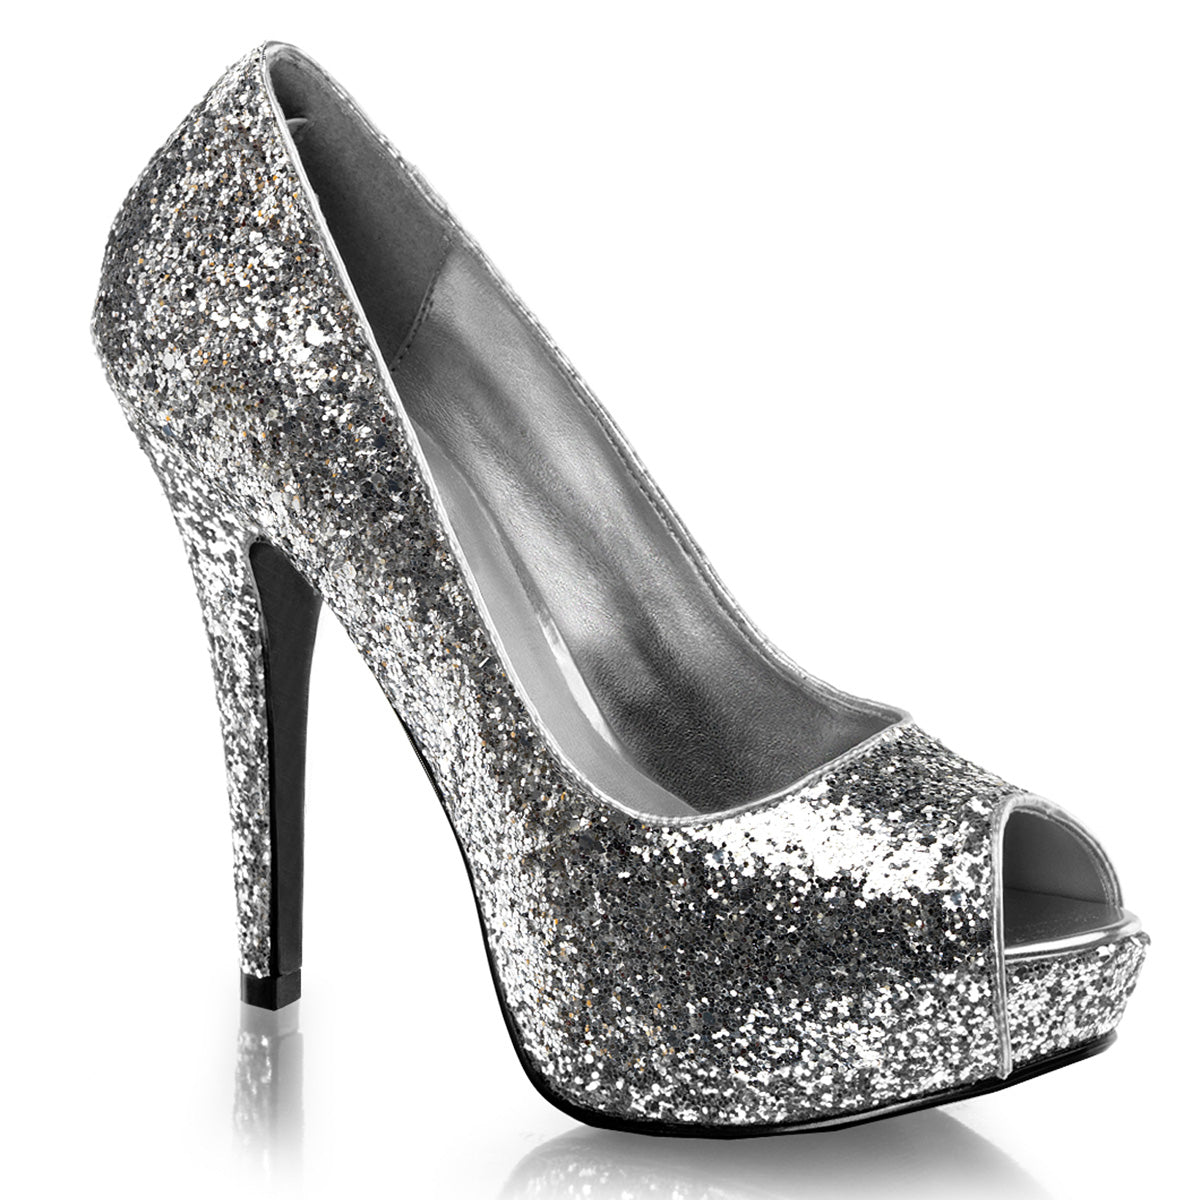 TWINKLE-18G Fabulicious 5 Inch Heel Silver Glitter Sexy Shoe